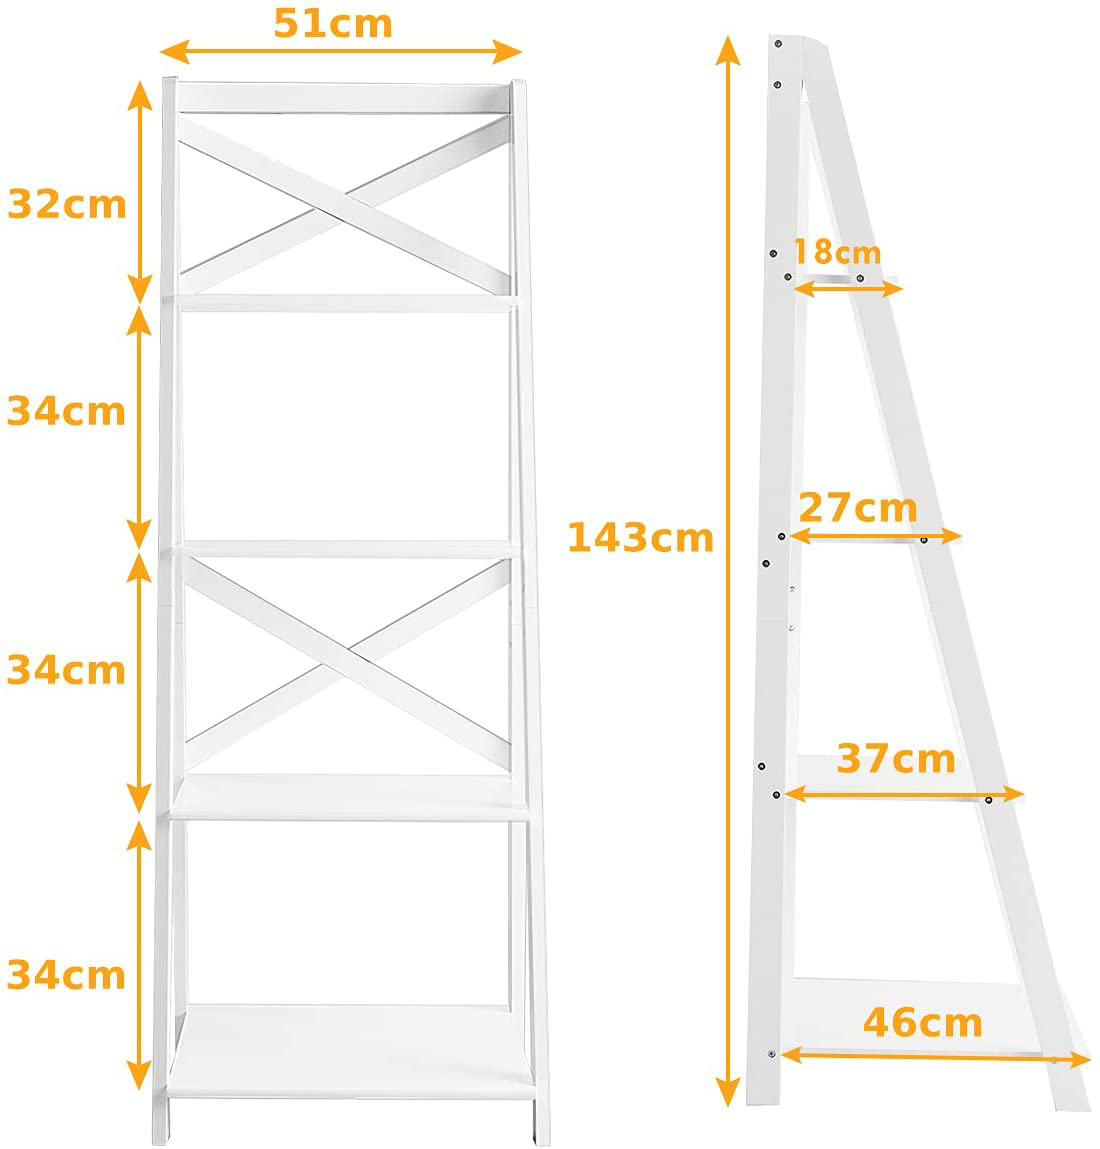 Angel 4-Tier Ladder Shelf Bookcase Plant Stand